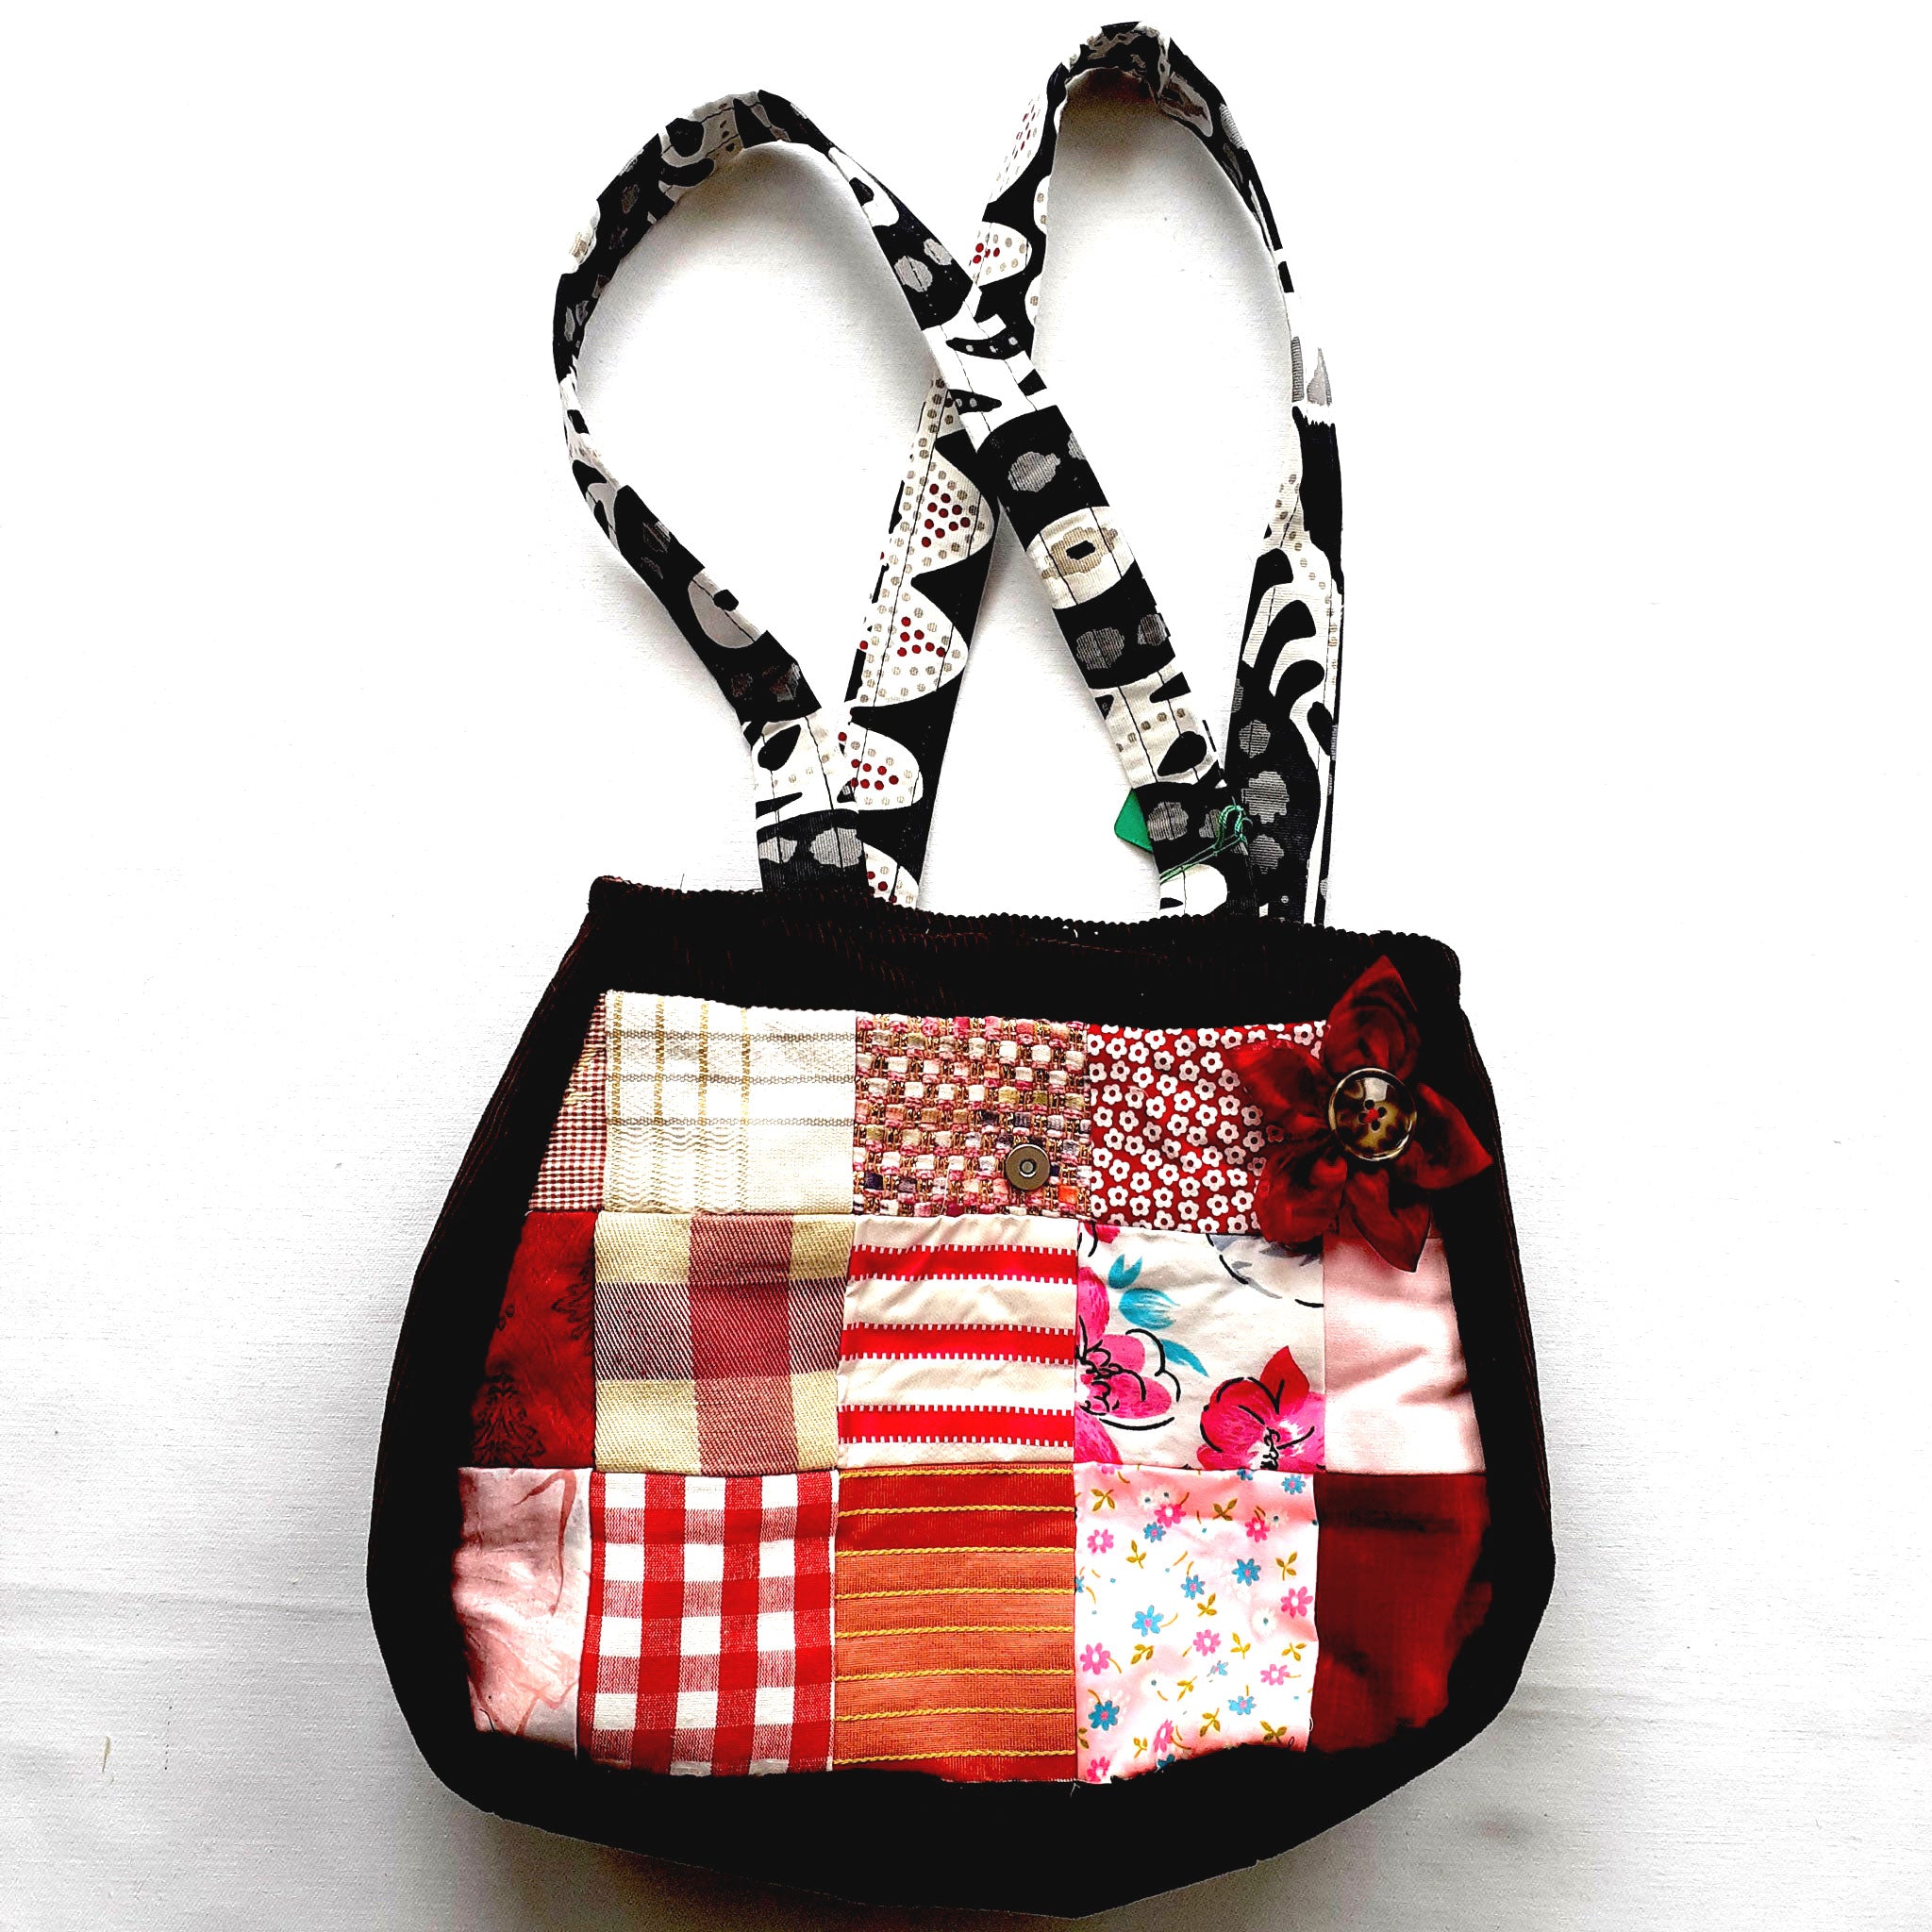 Handmade patchwork handbag